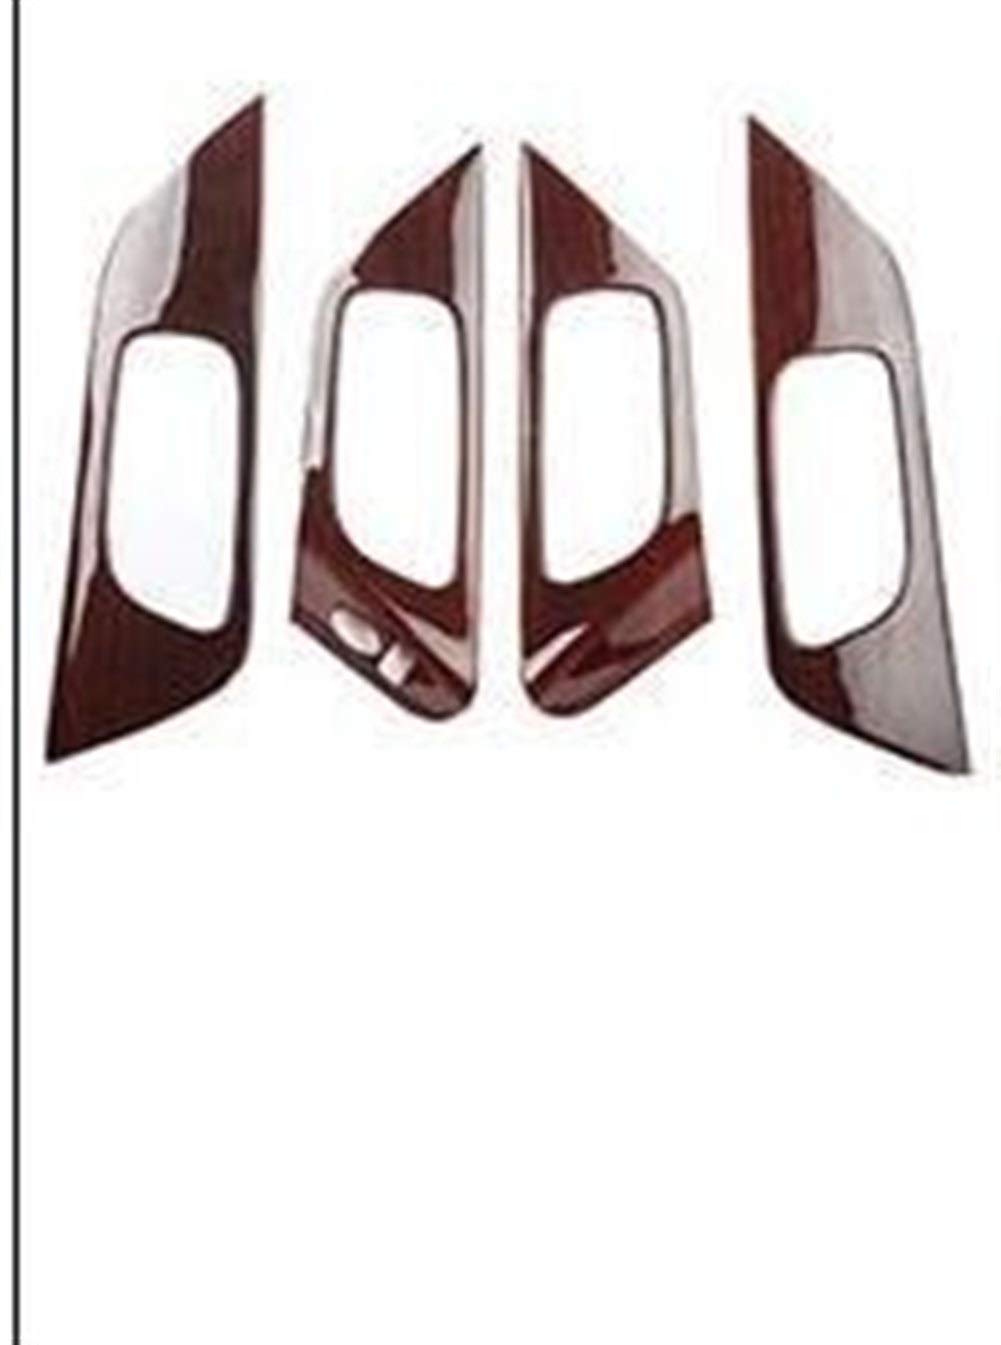 Peach Holzmaserung Fenster Switch Panel-Abdeckungs-Ordnung gepasst for Nissan Teana Fit for Altima 2013-2018 Interieurleisten Innenausstattung(E) von Generic